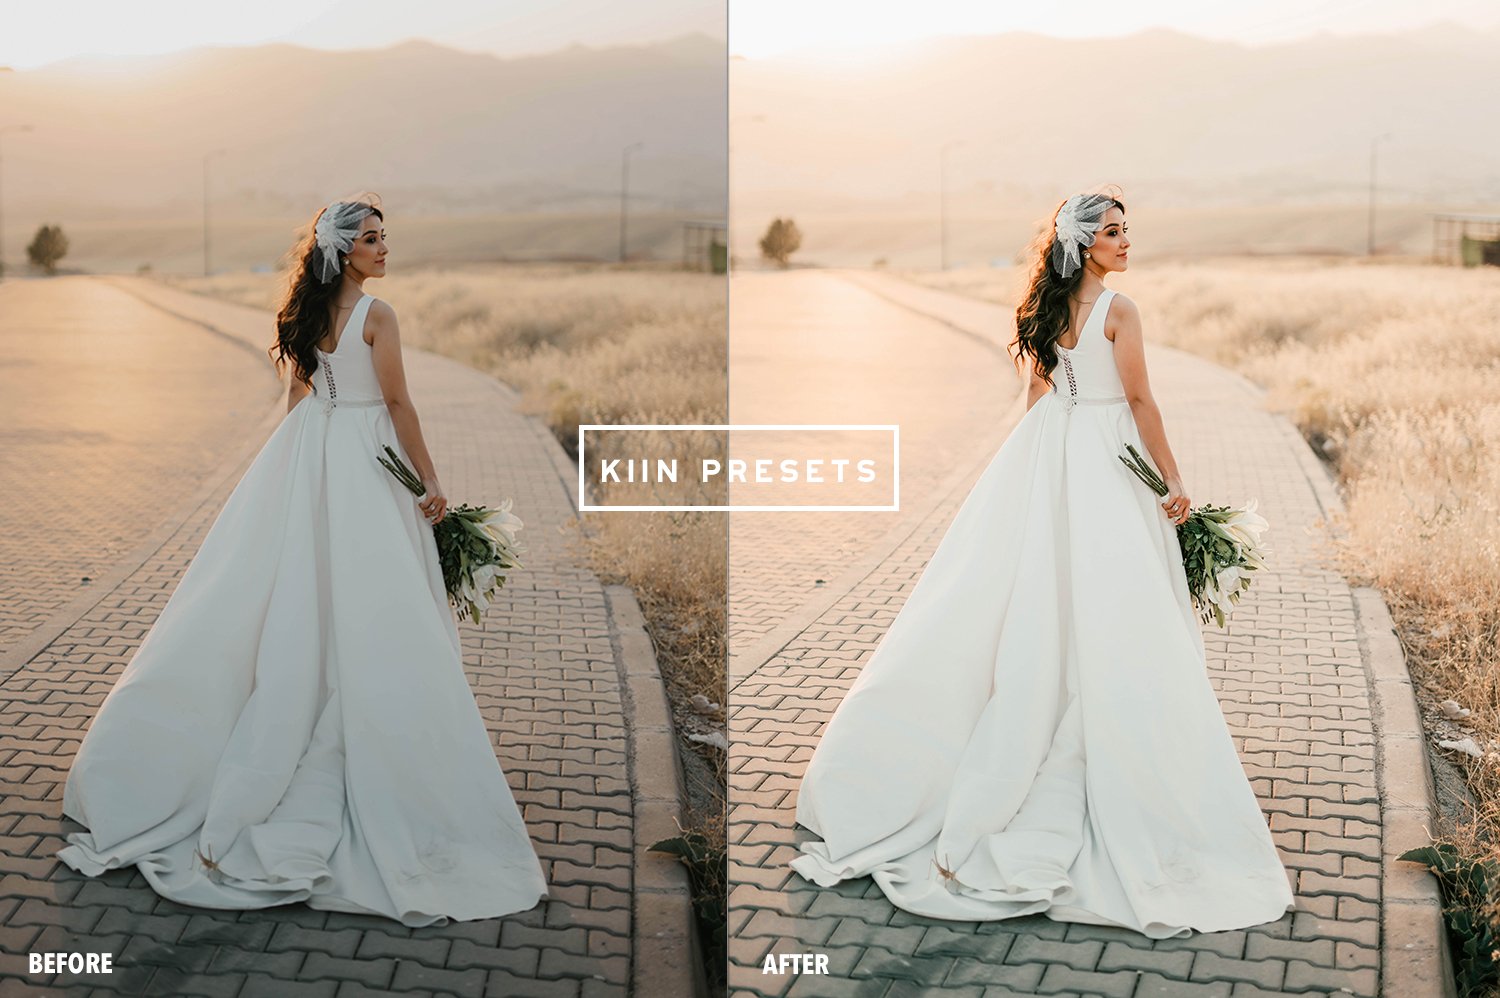 04kiin lightroom presets wedding presets wedding filter outdoor presets airy filter warm preset bright wedding presets 306